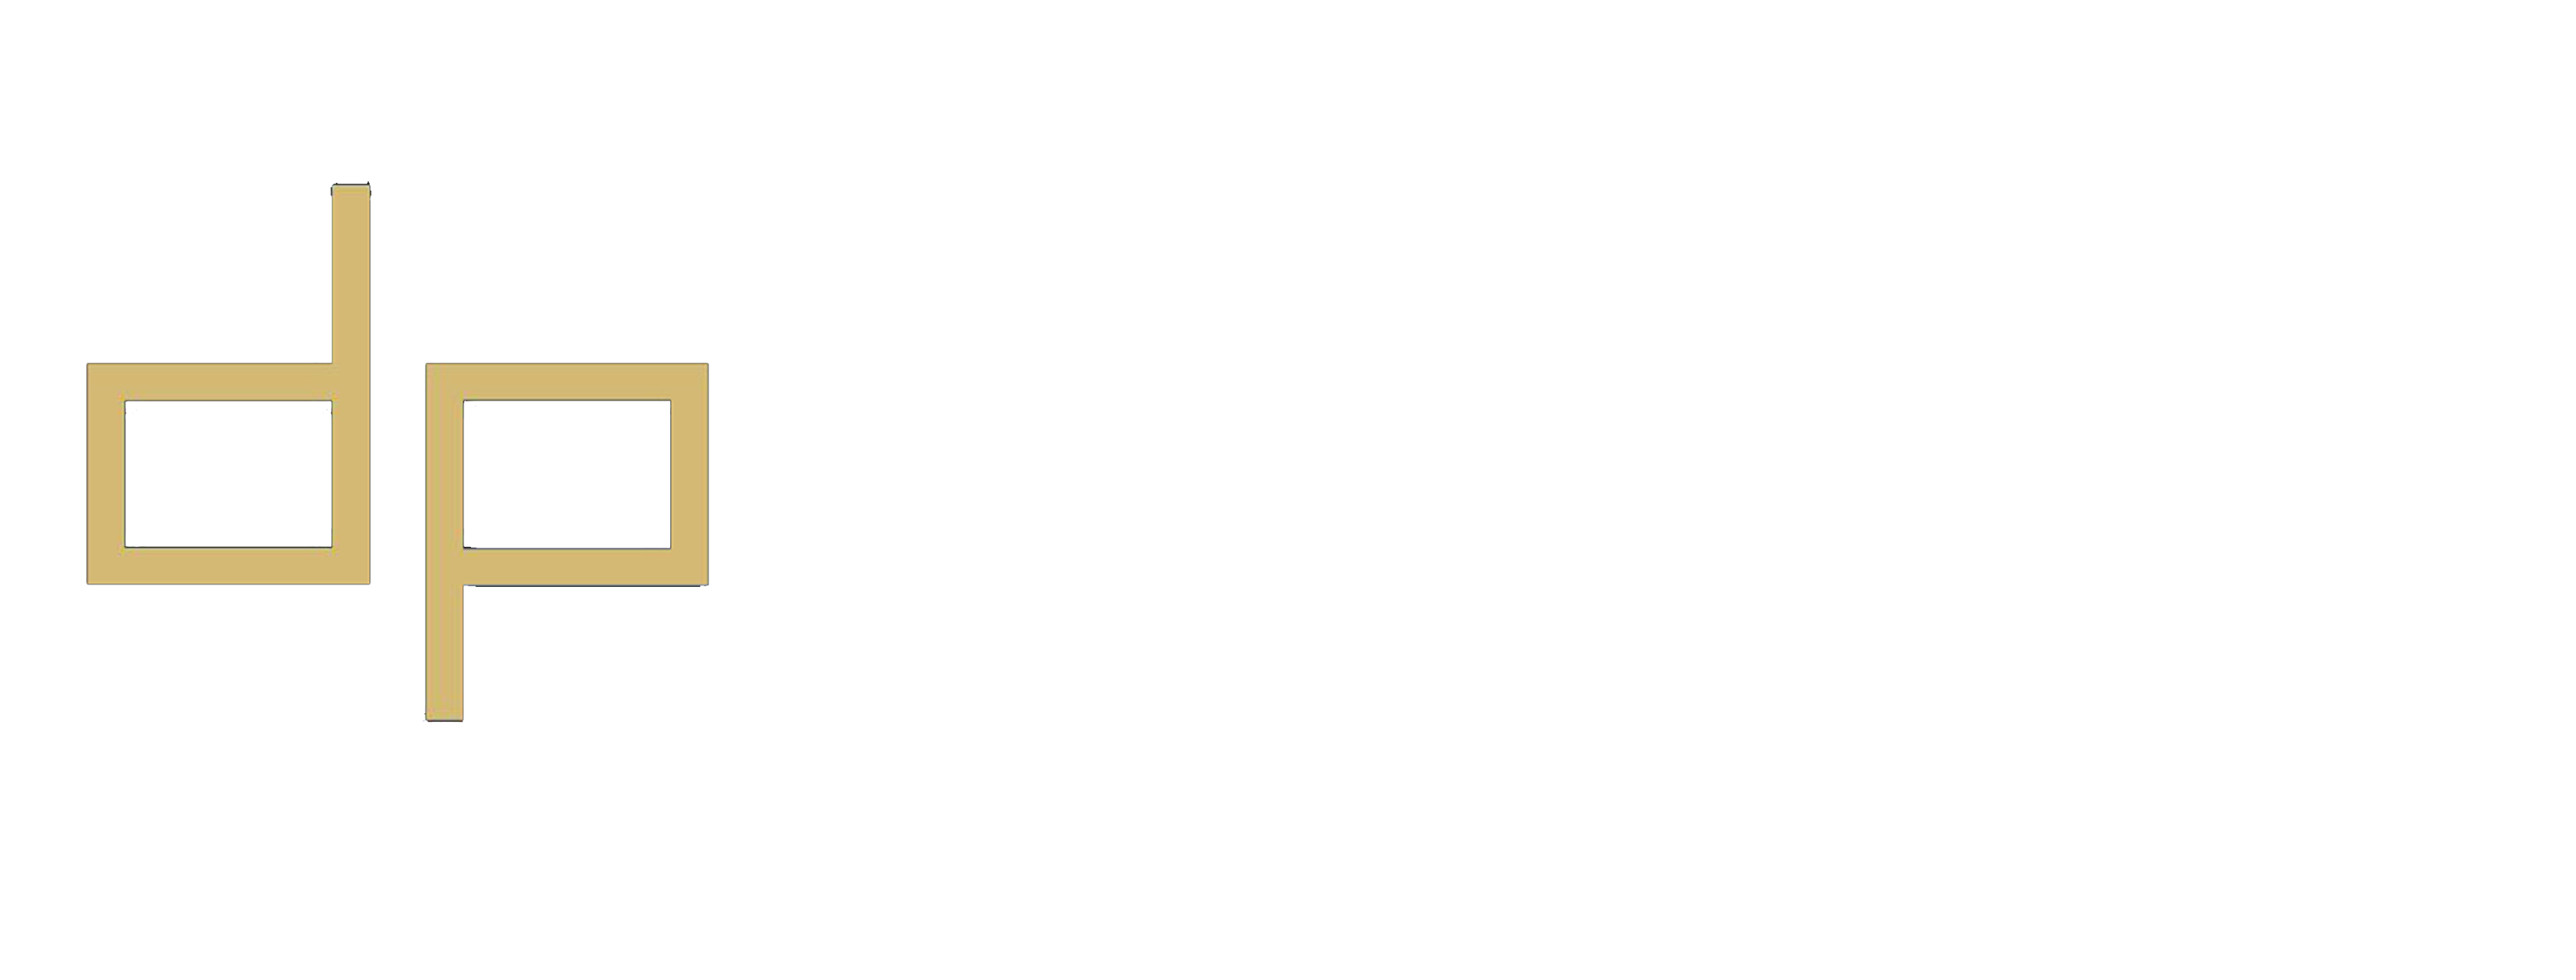 Digital Point In